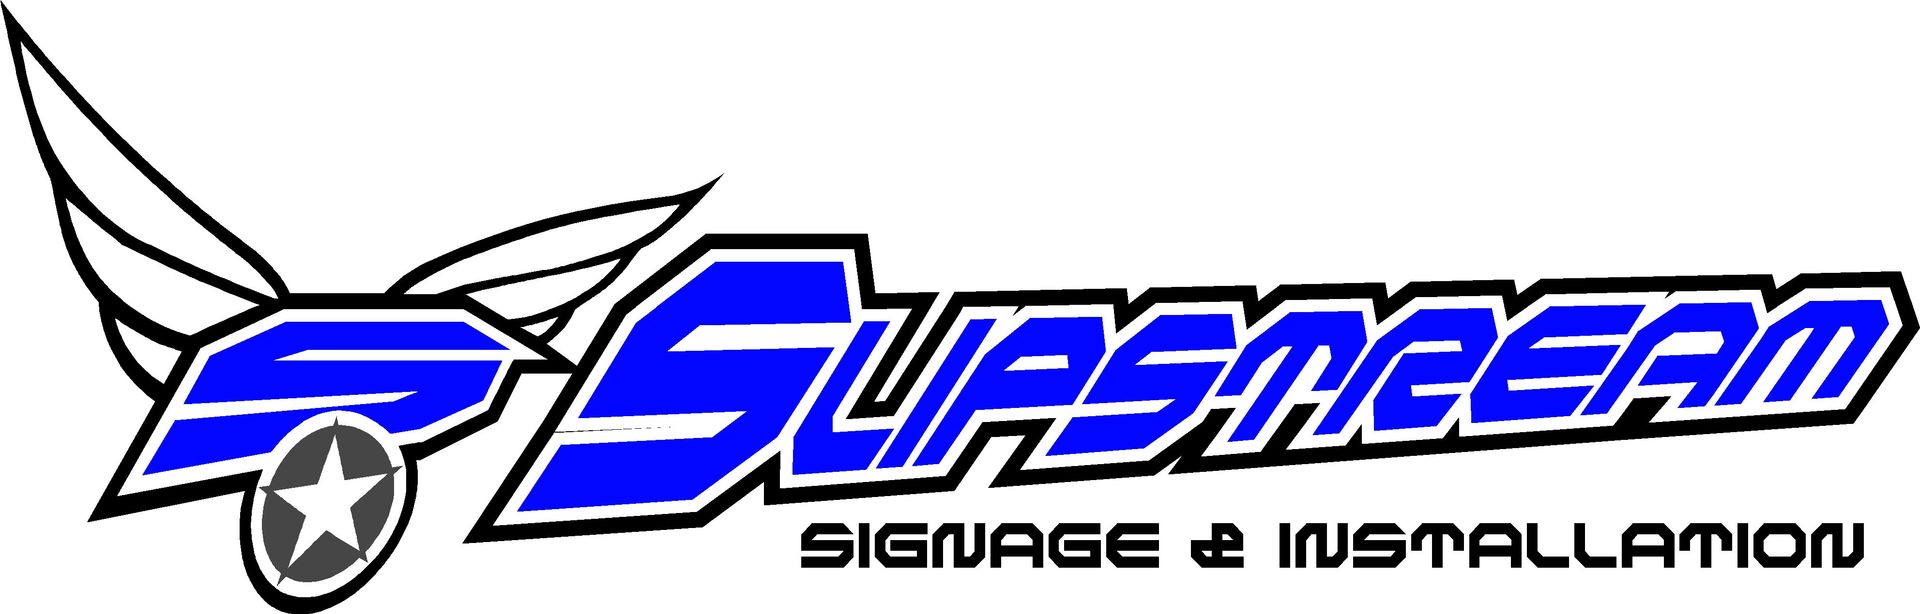 Slipstream Signs logo